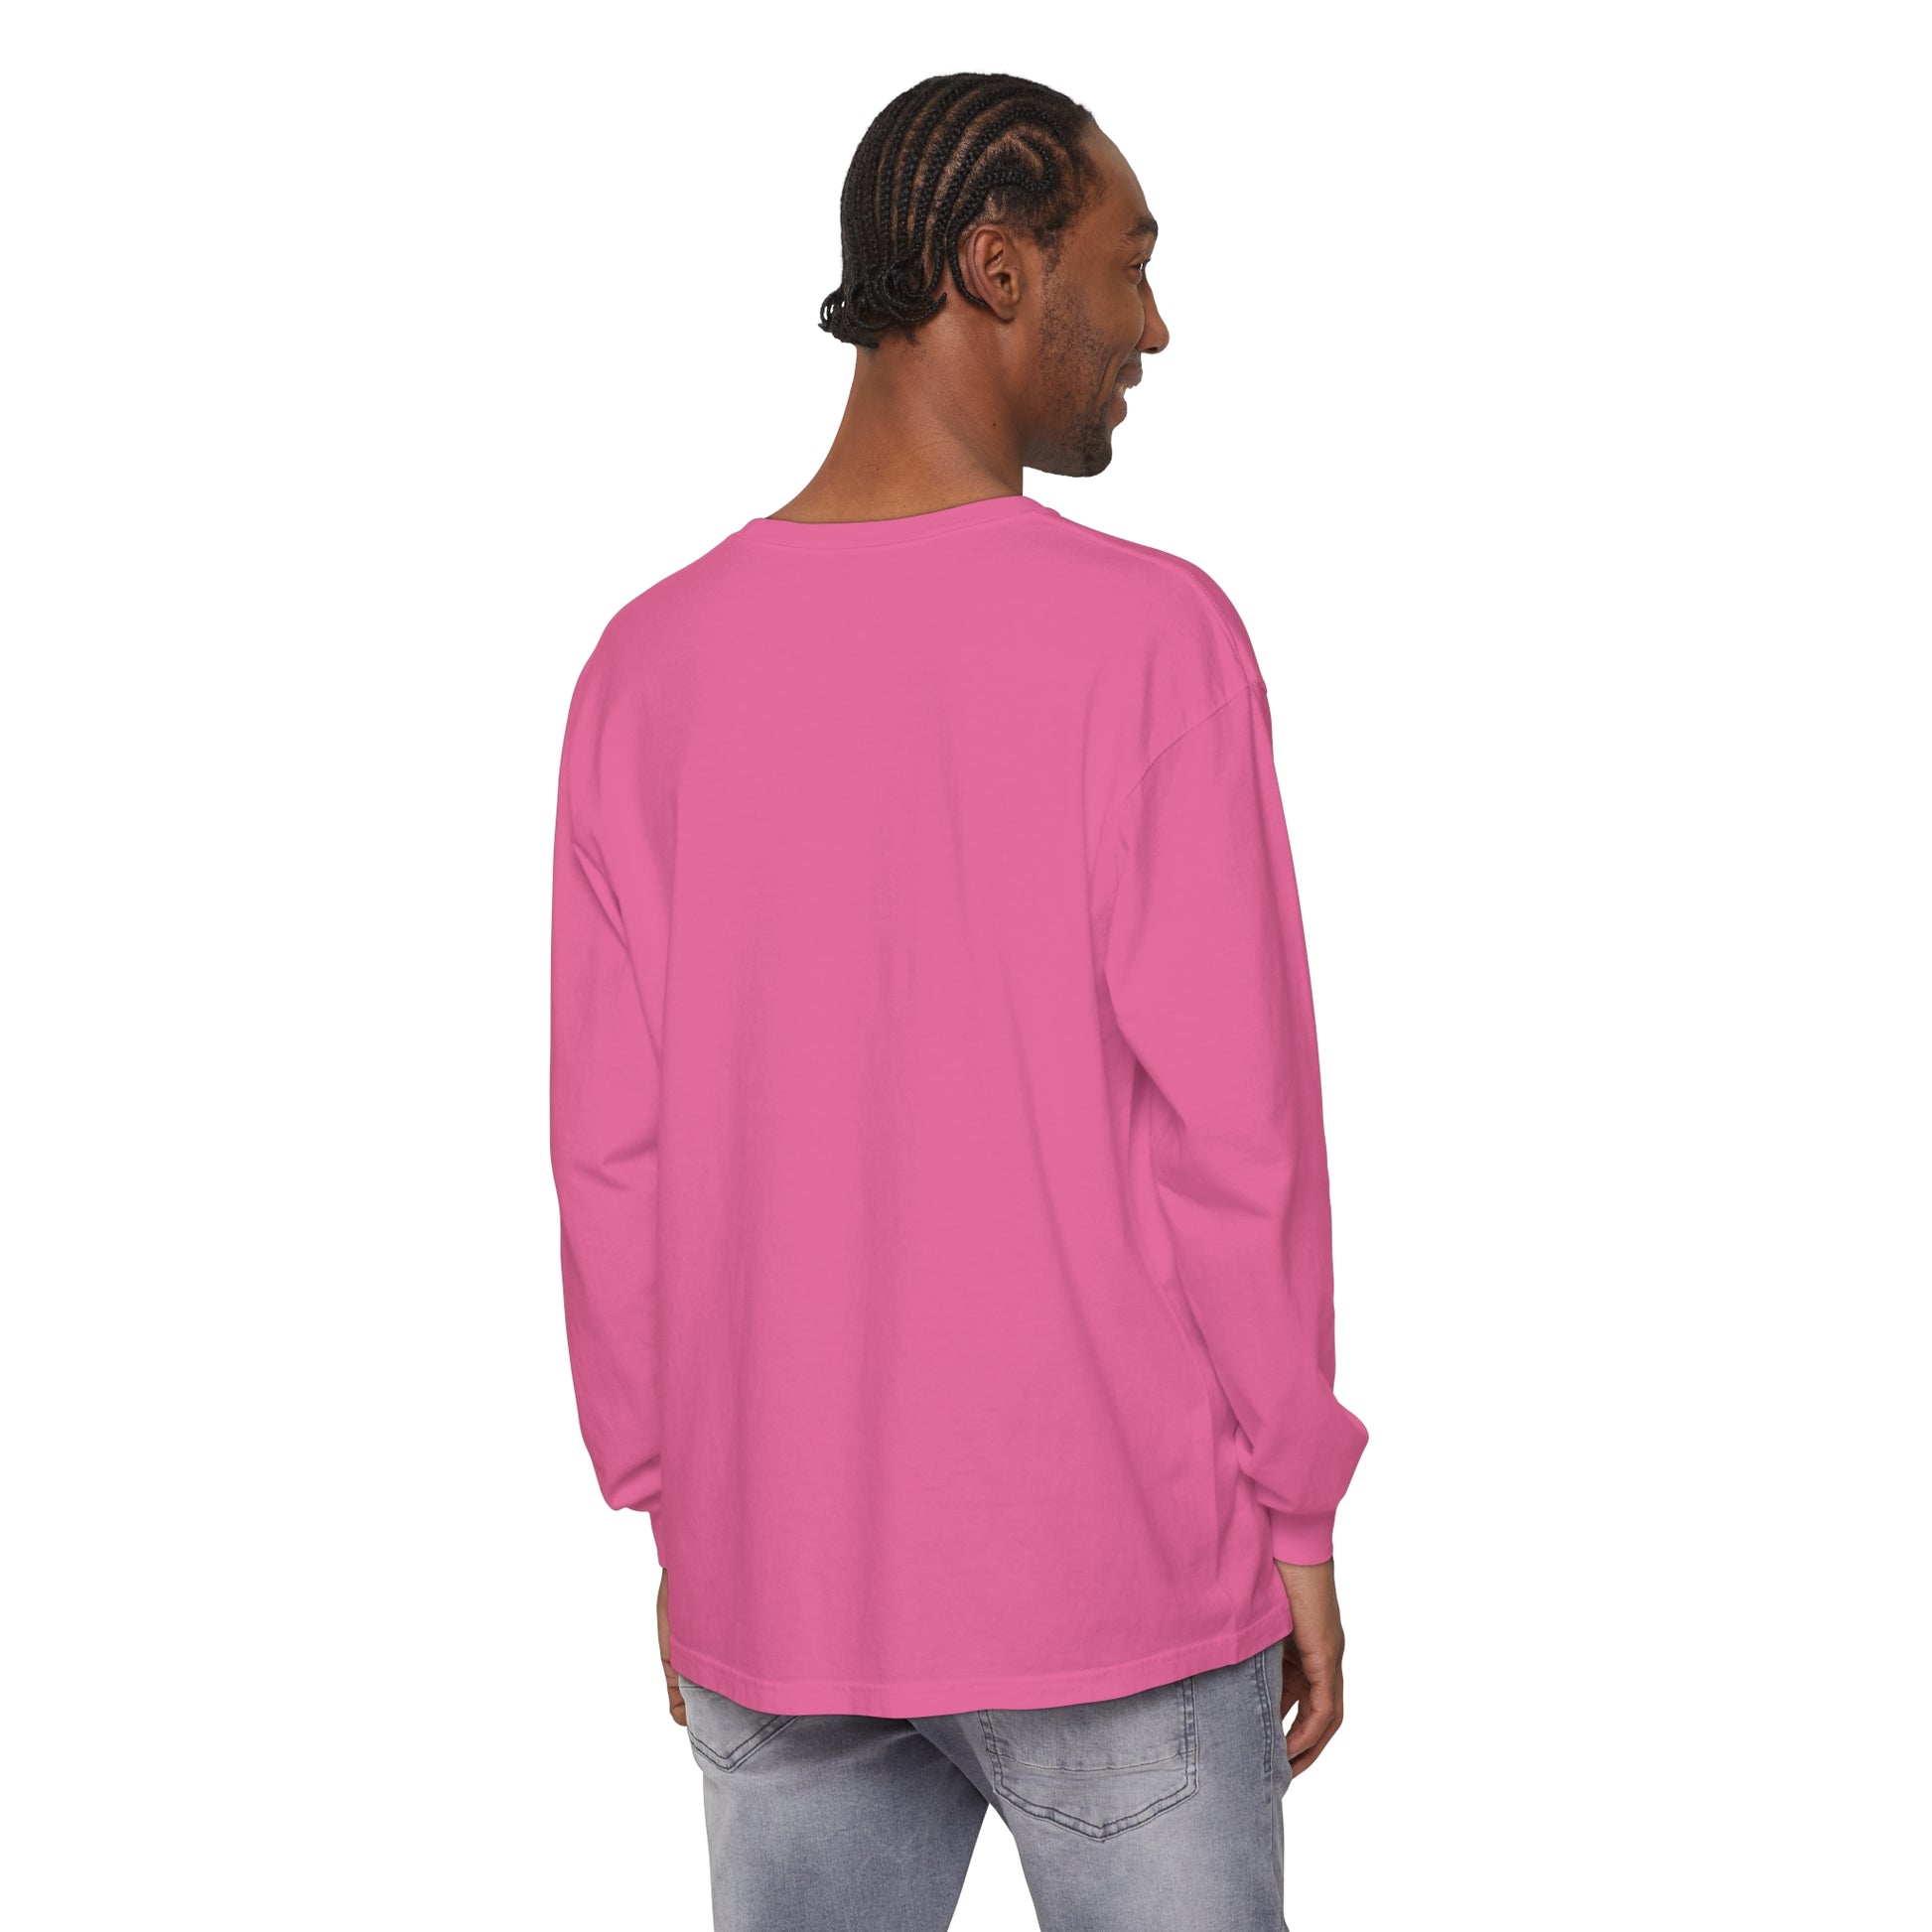 Jax Long Sleeve Top Pink